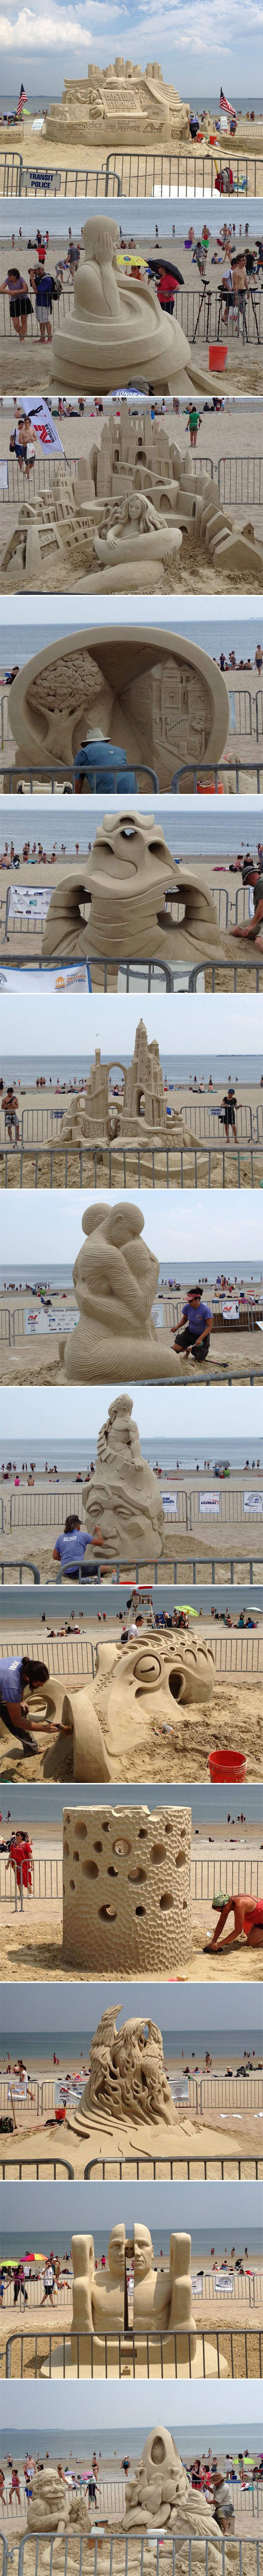 Revere Beach Sand Sculpting Festival, the octopus was the winner…